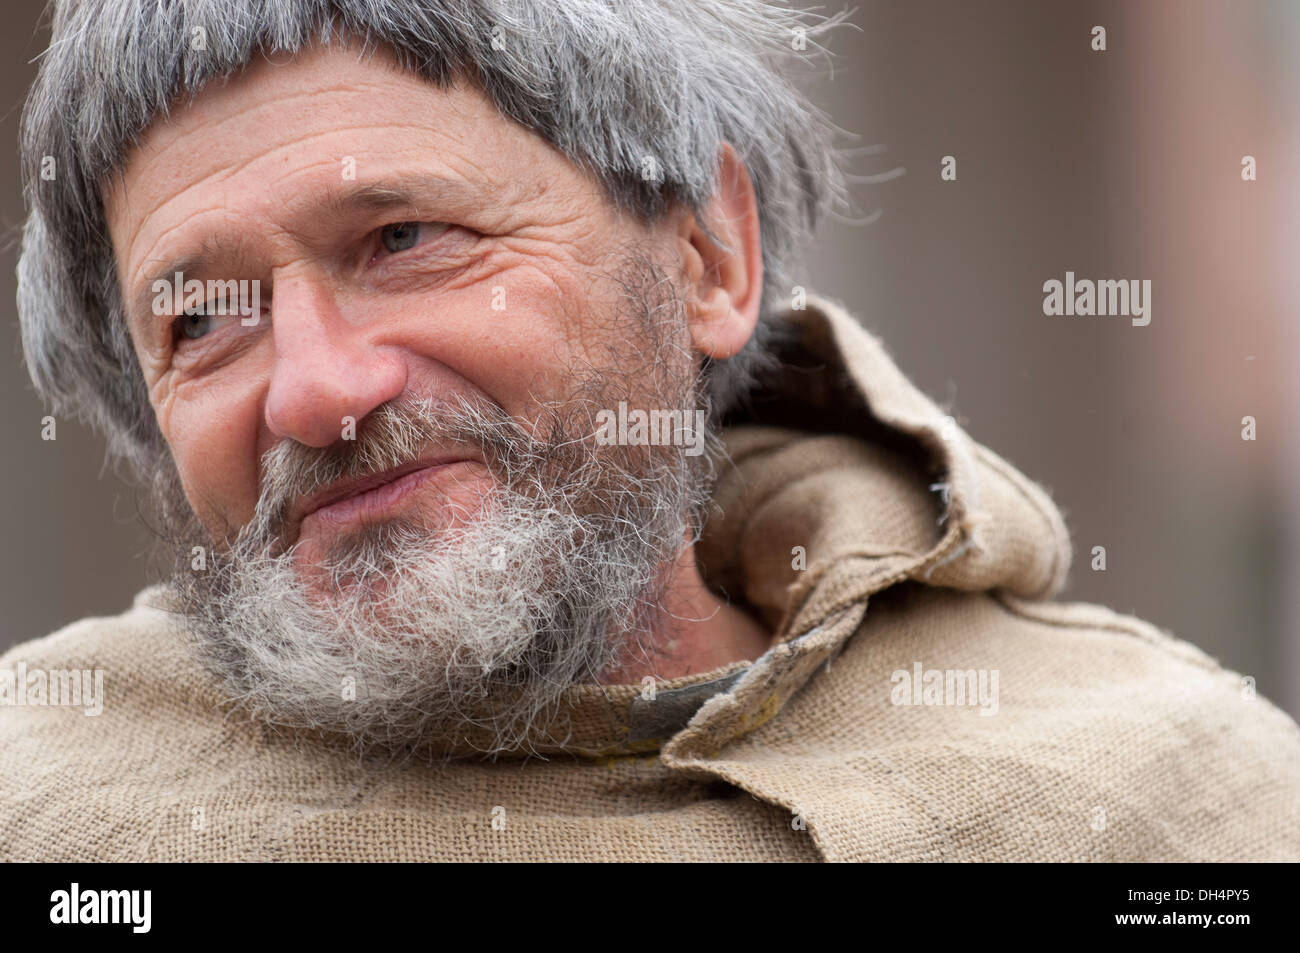 Portrait of man in habit Stock Photo